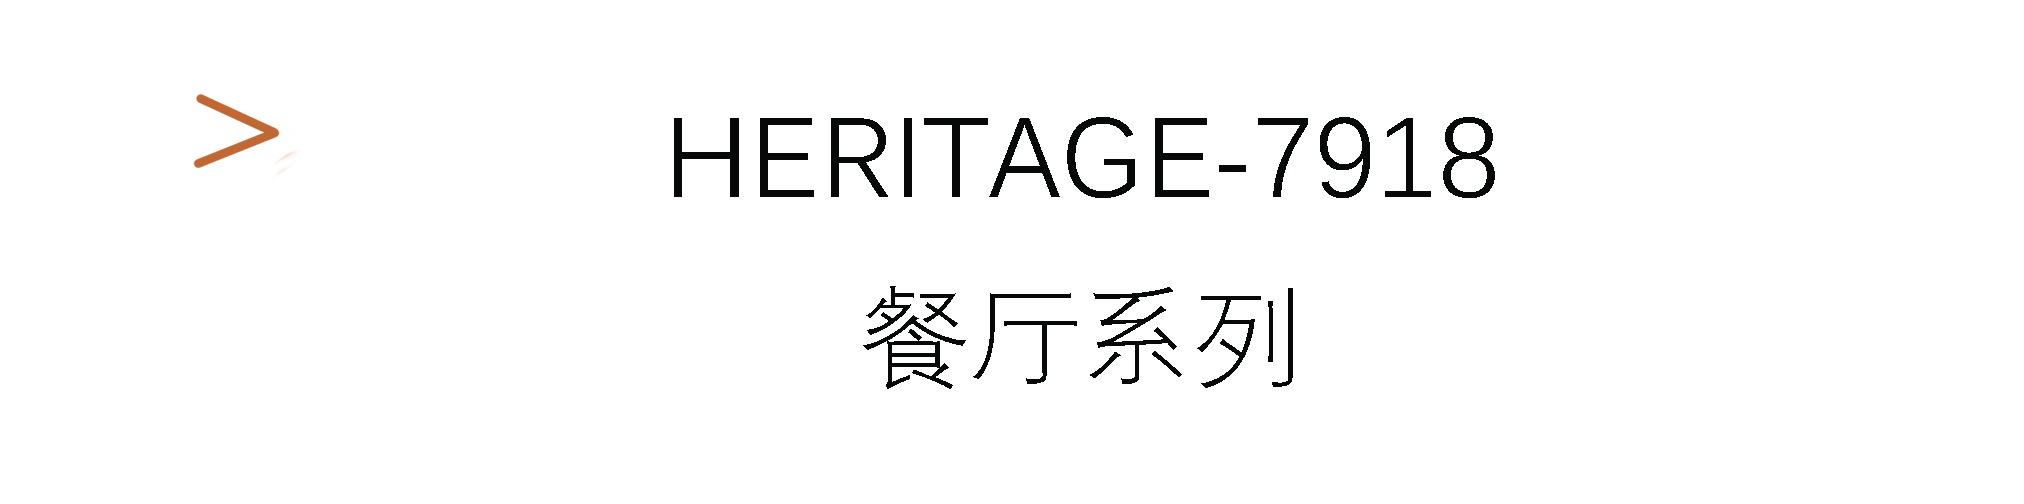 Heritage-7918